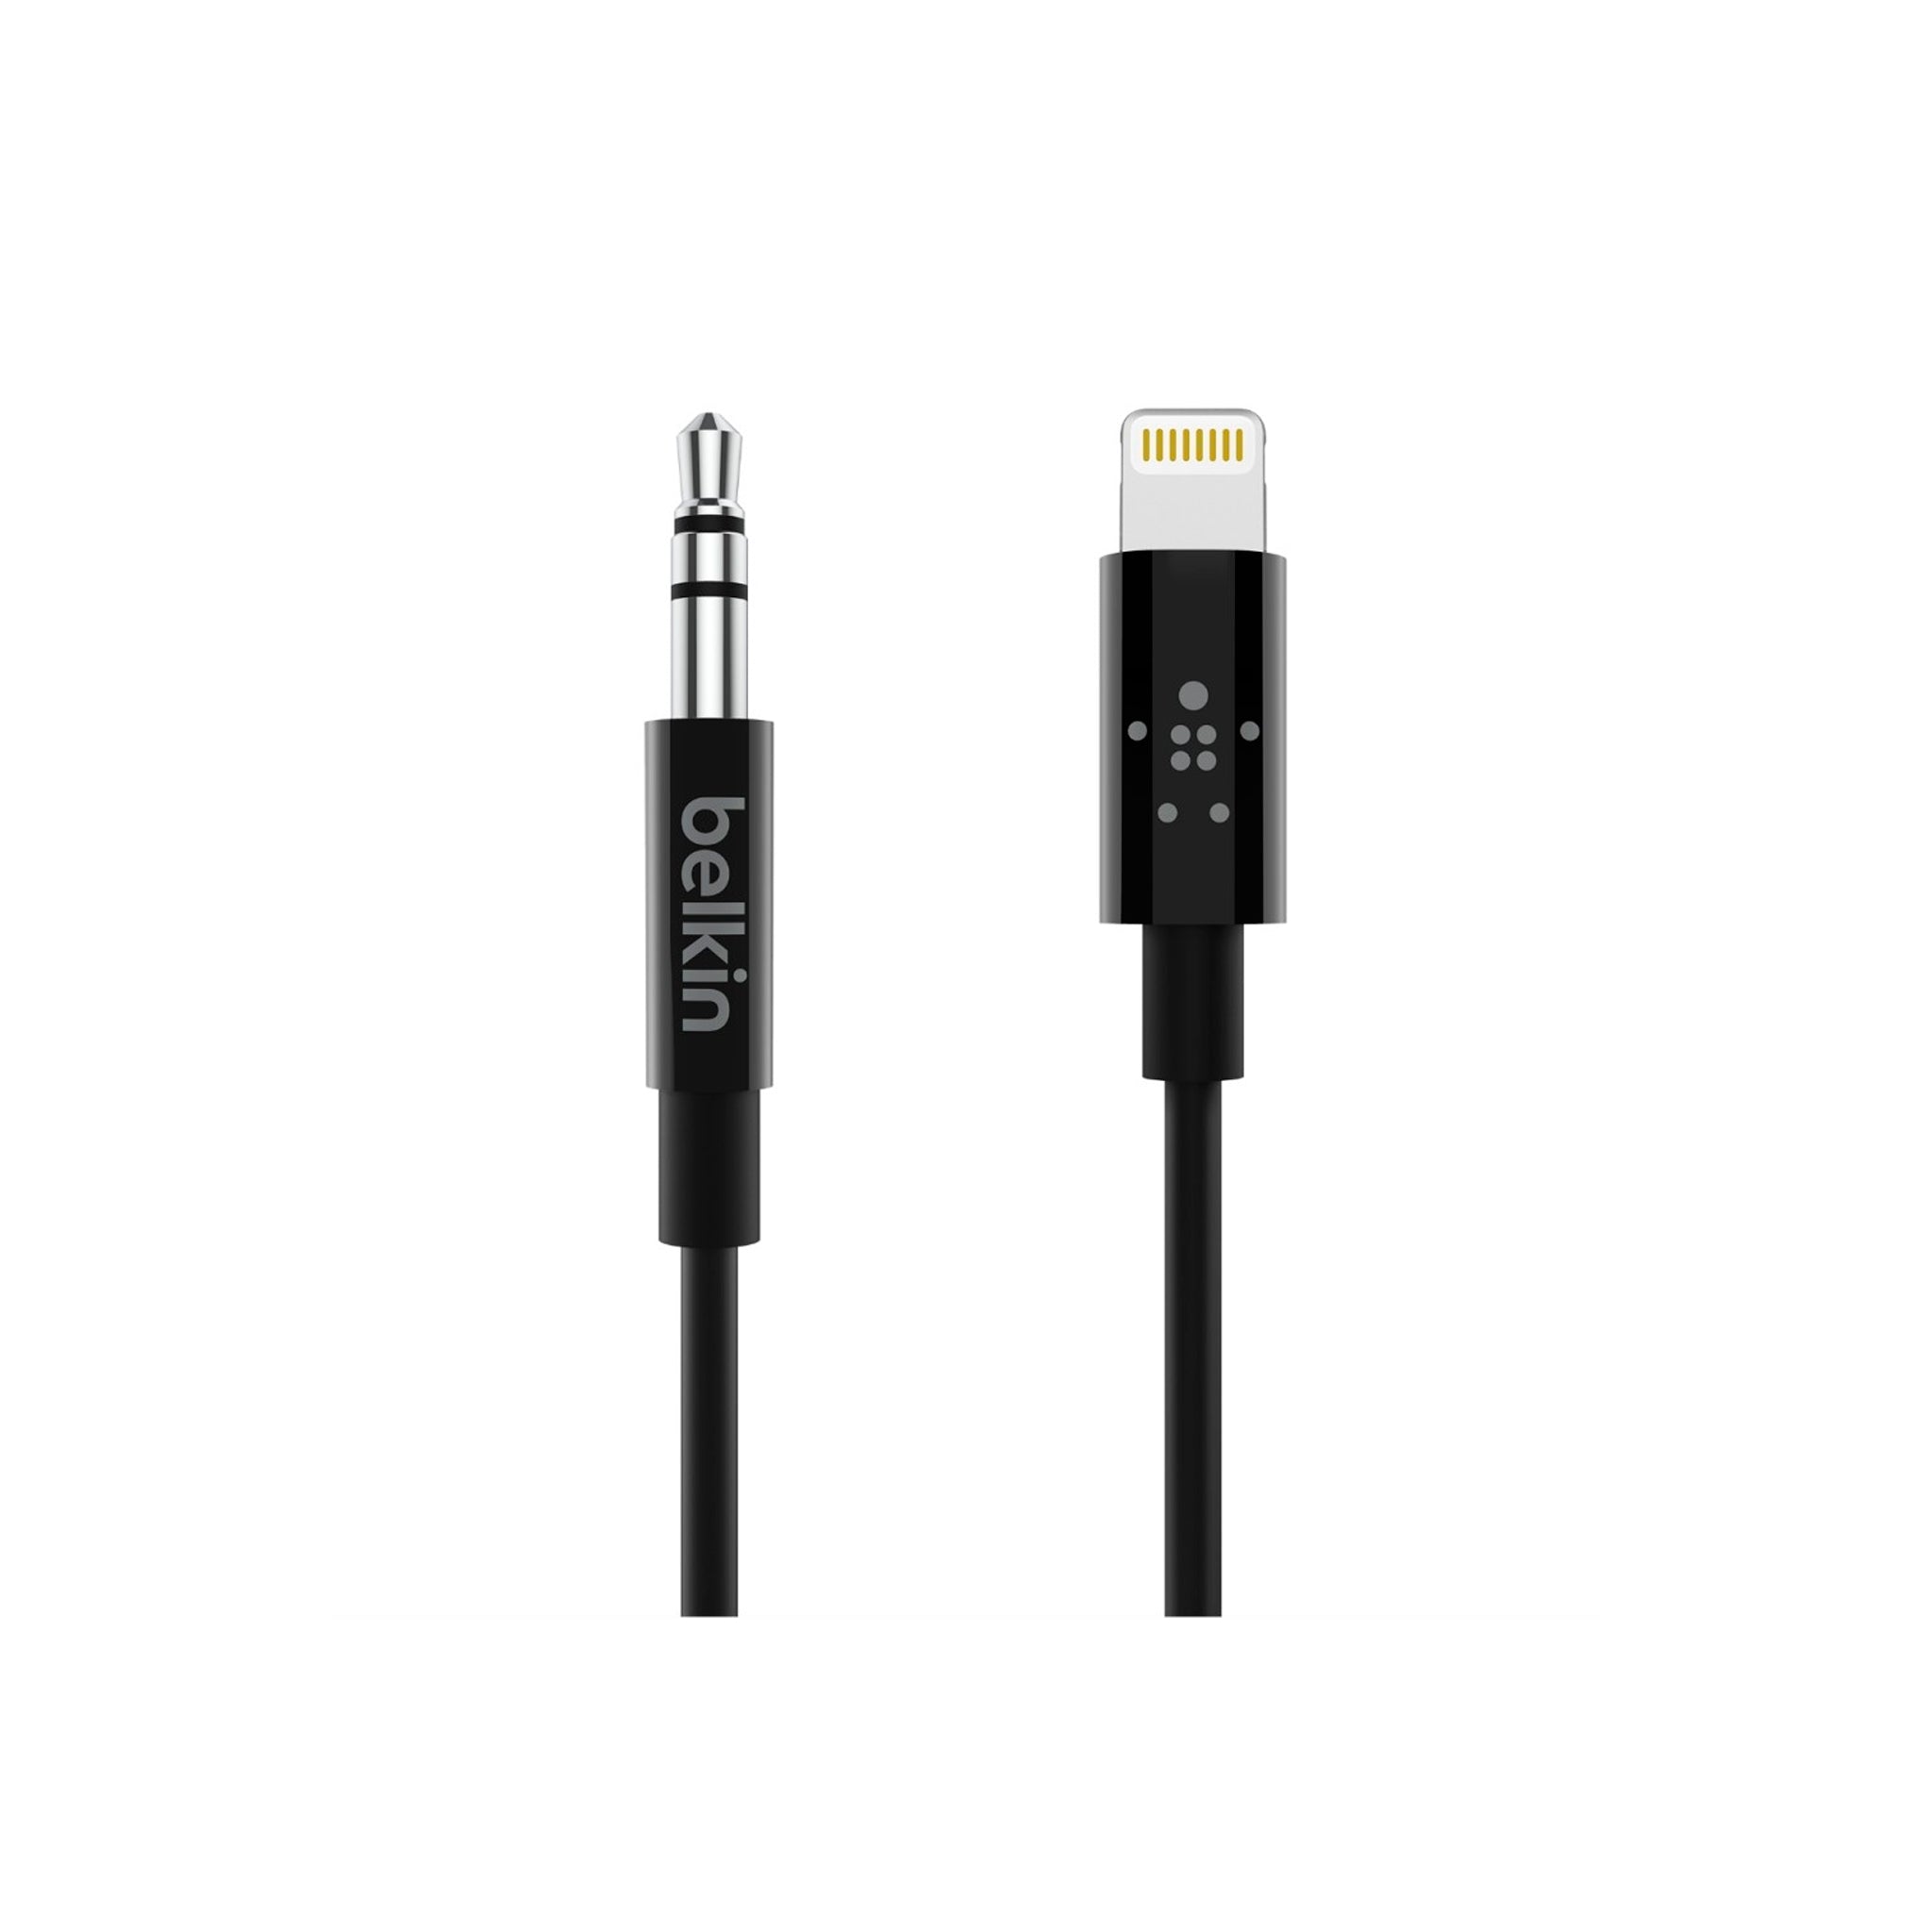 Belkin - Apple Lightning To 3.5mm Aux Cable 6ft - Black